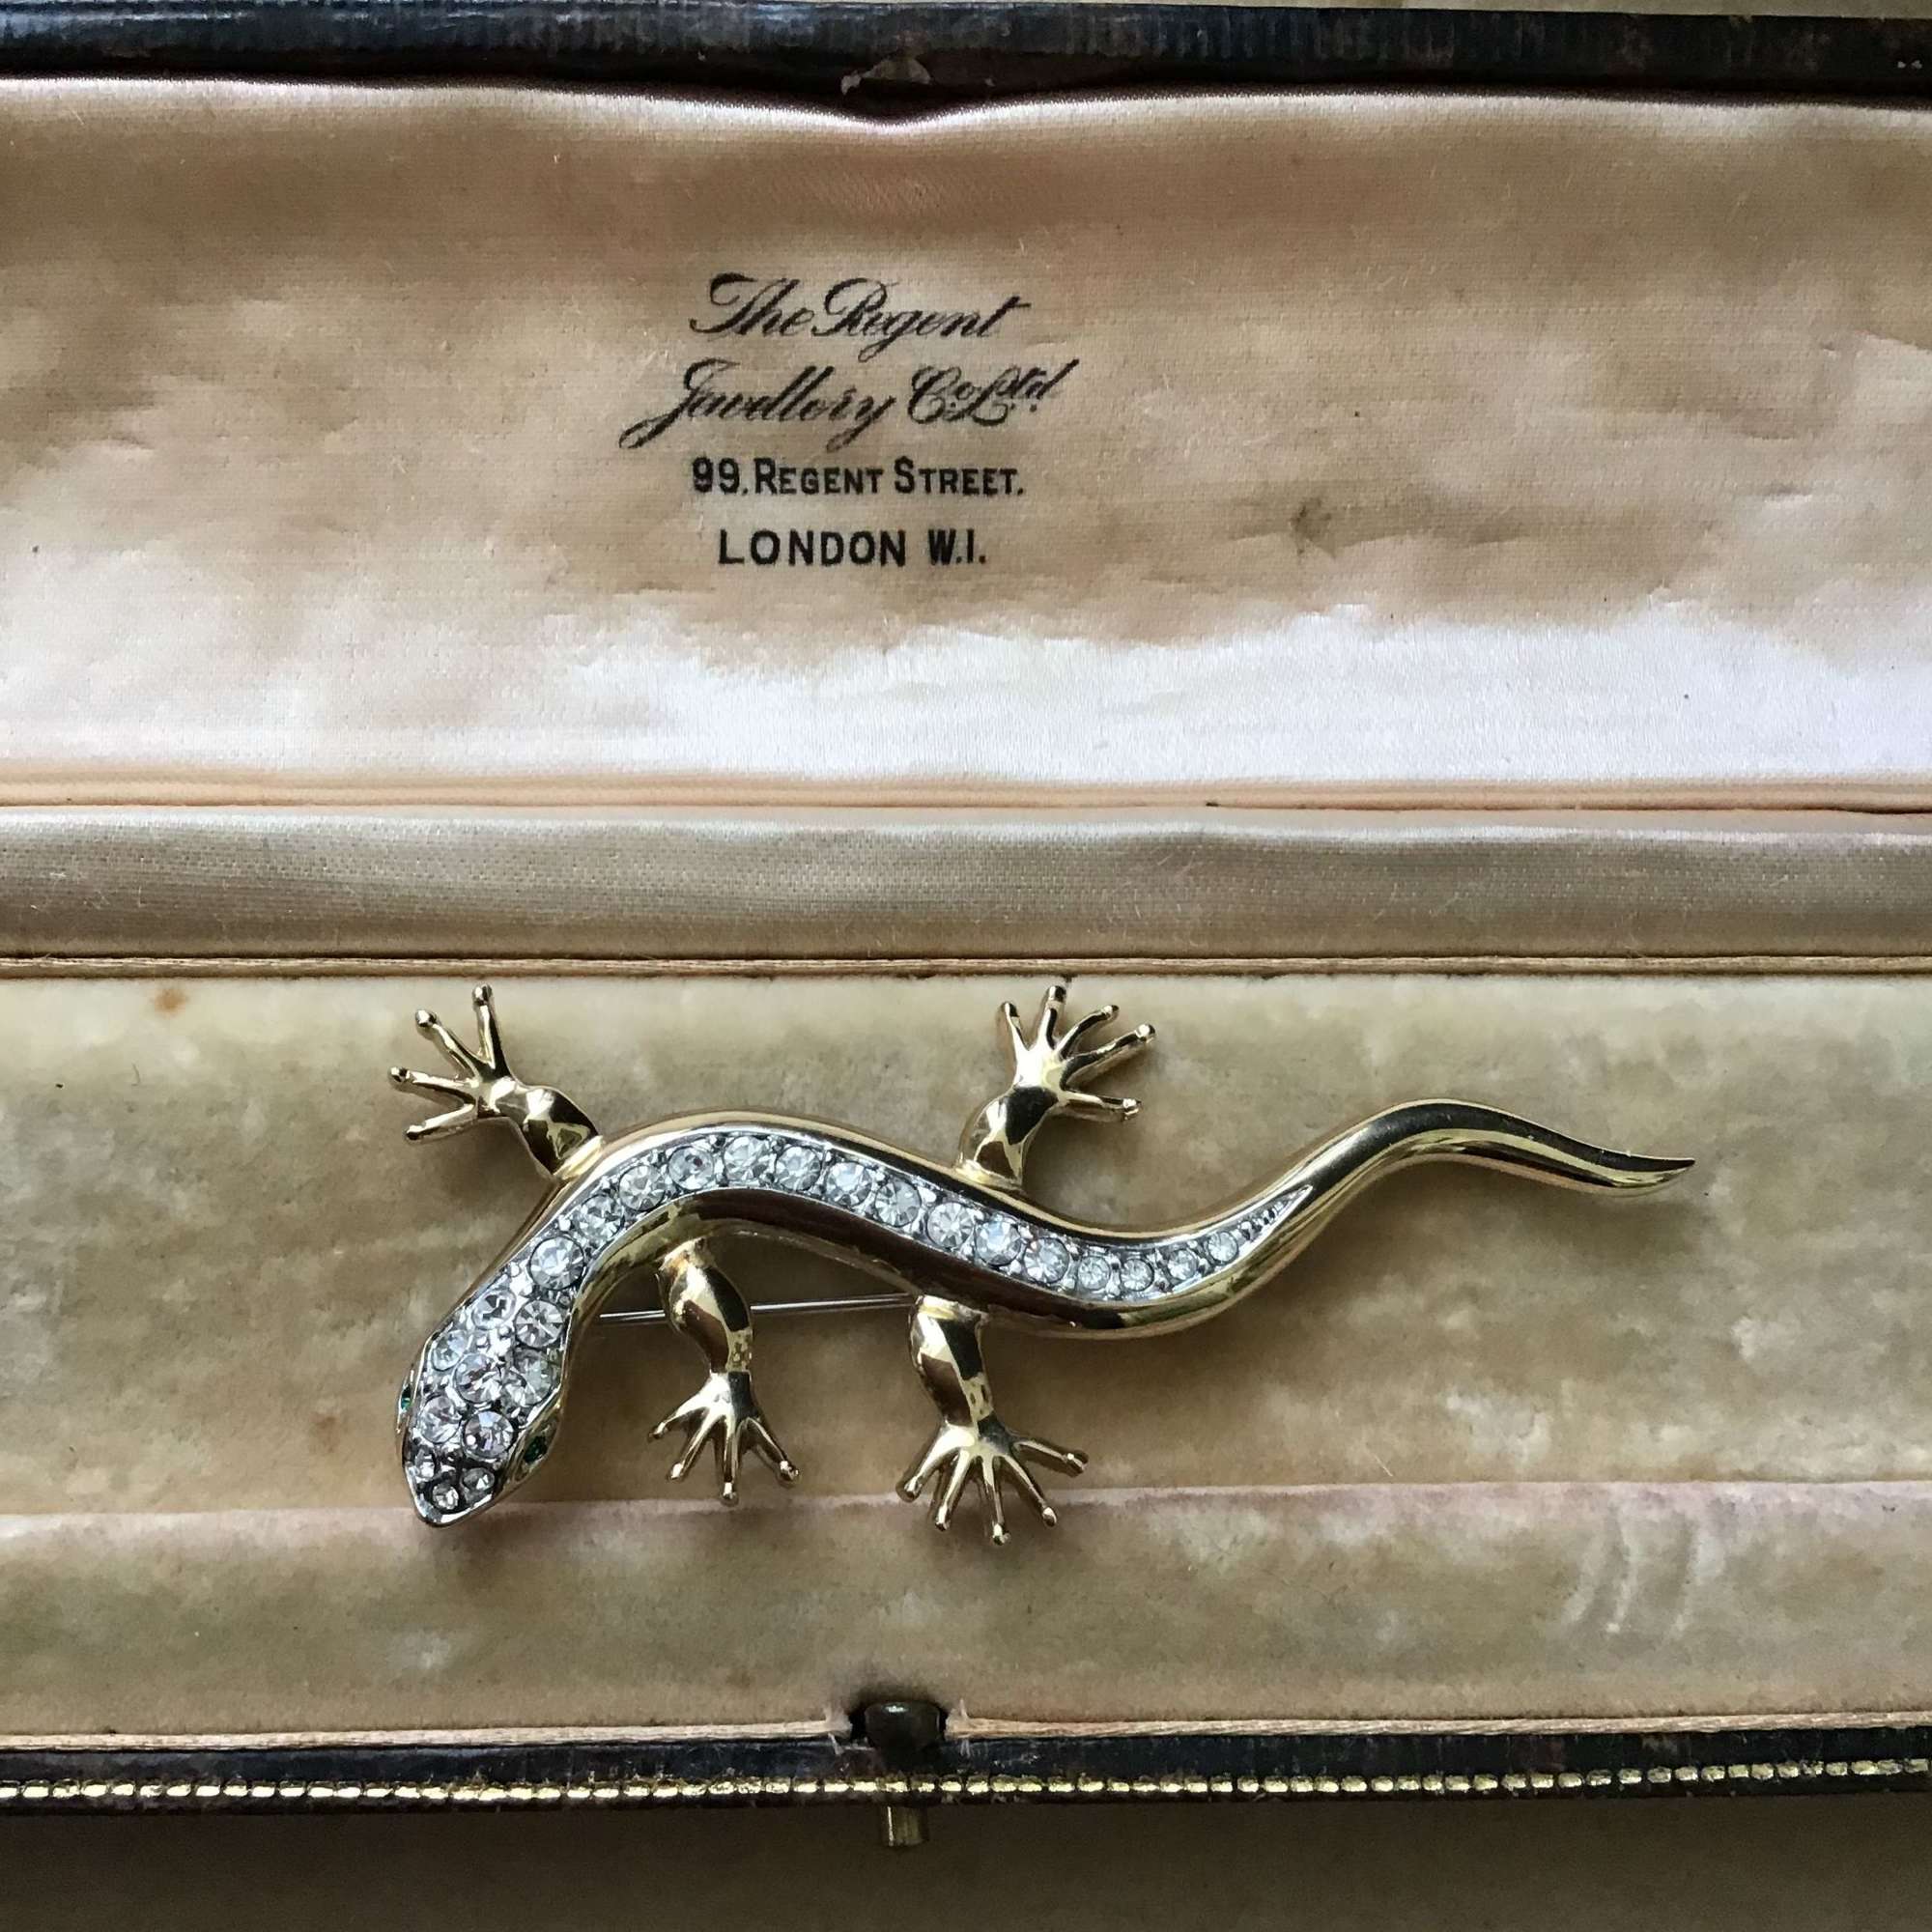 BJL paste lizard brooch